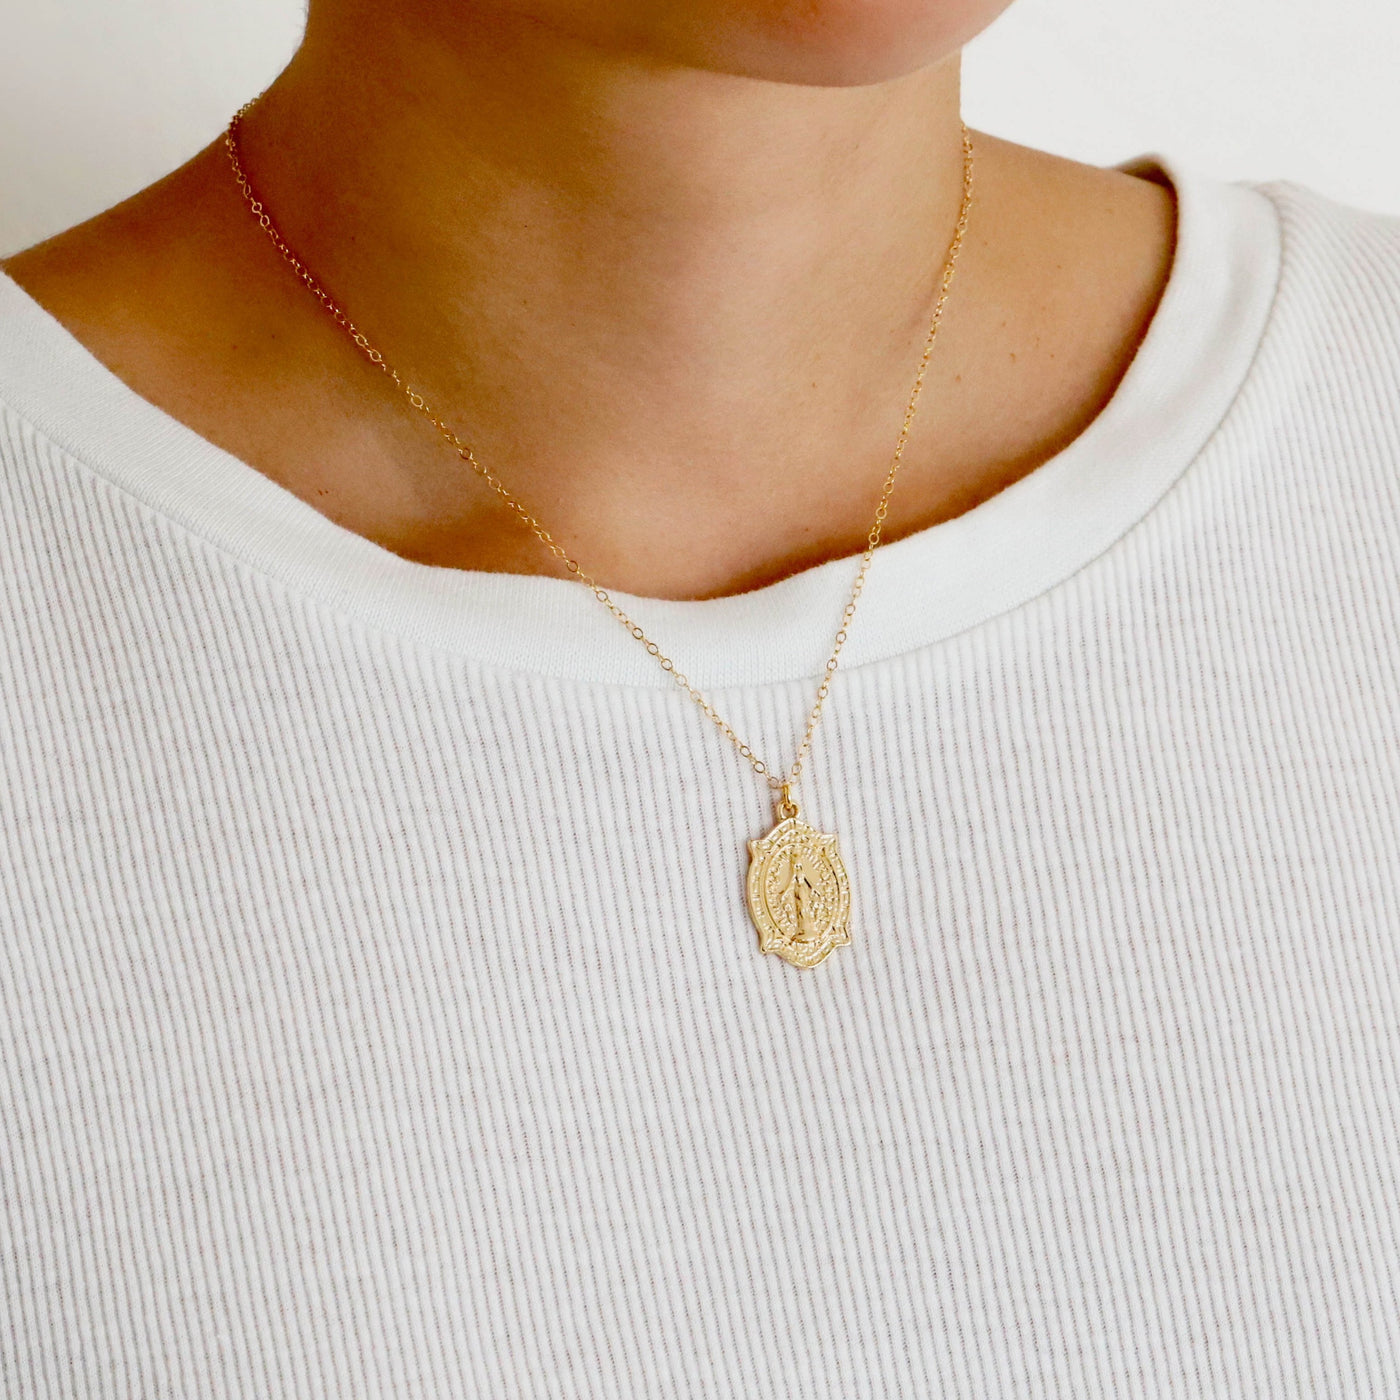 Gold religious pendant necklace